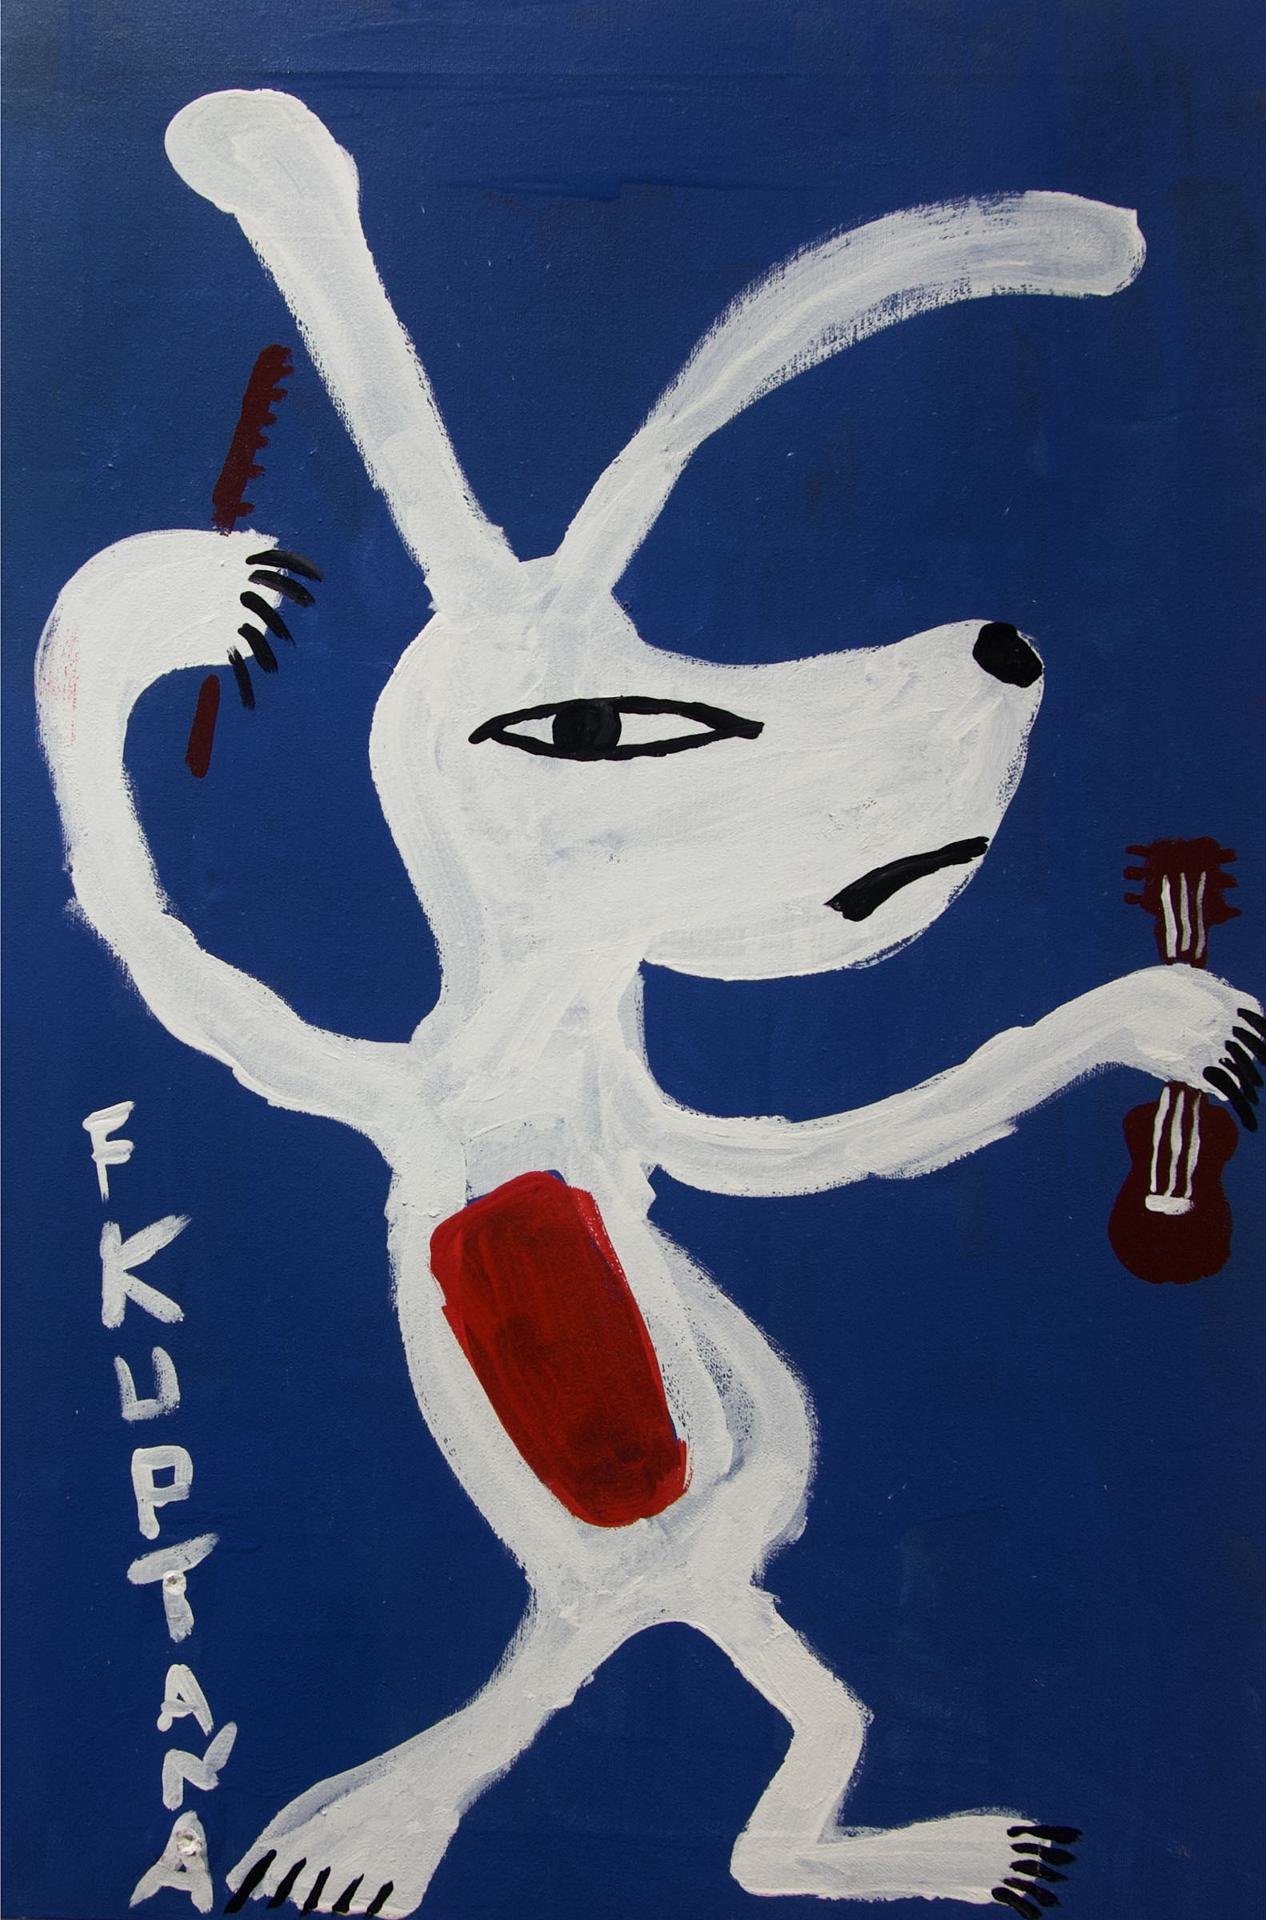 Floyd Kuptana (1964-2021) - Untitled (The Fiddler)